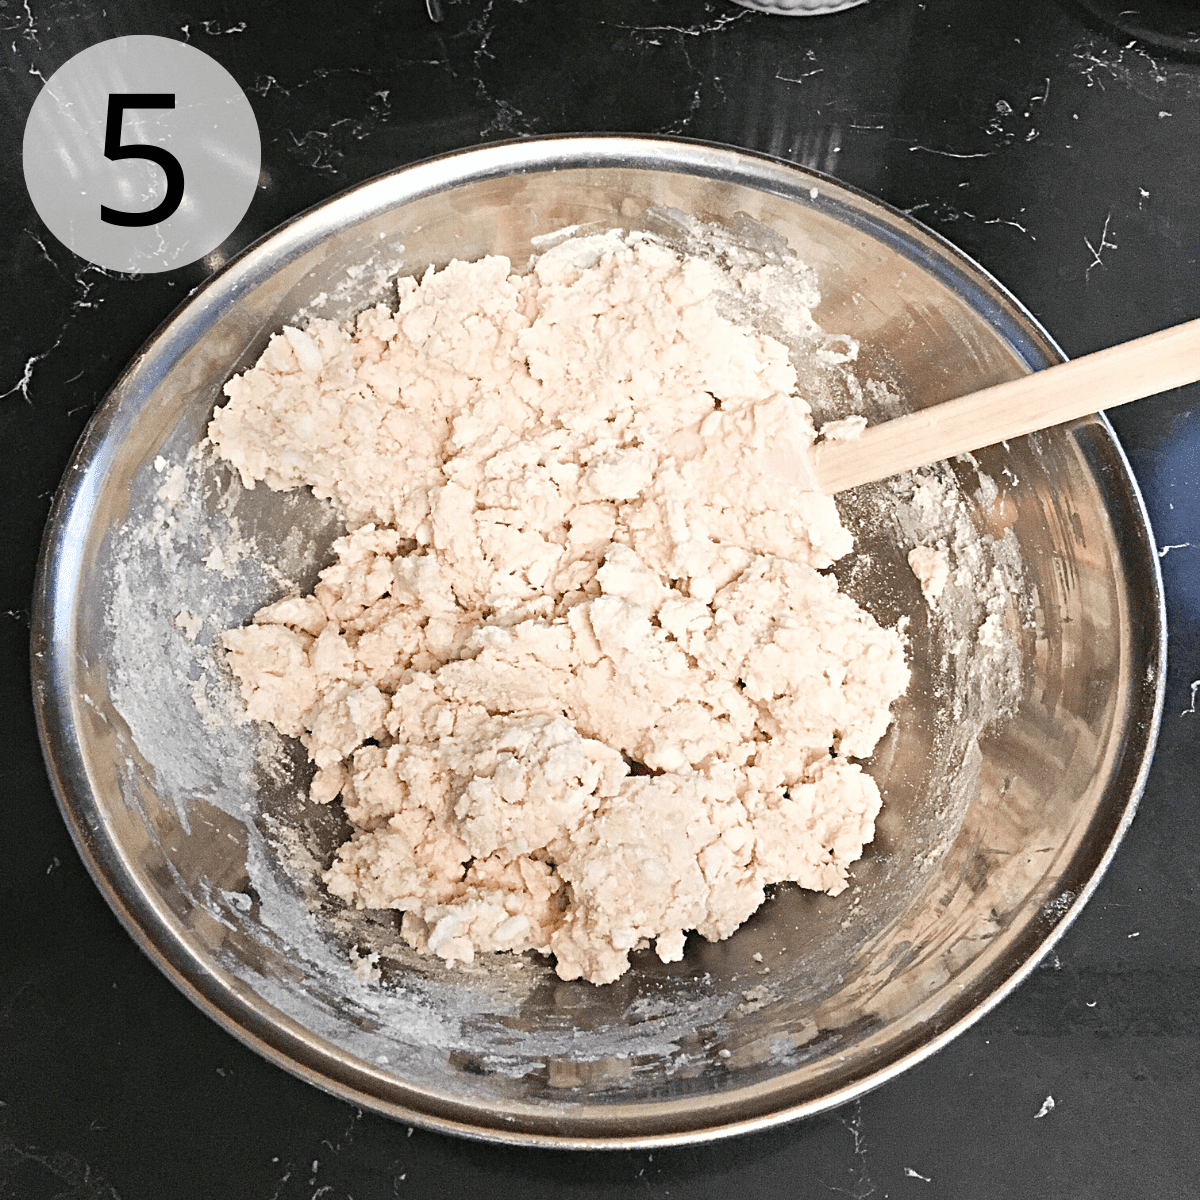 Mixing the scone dough.